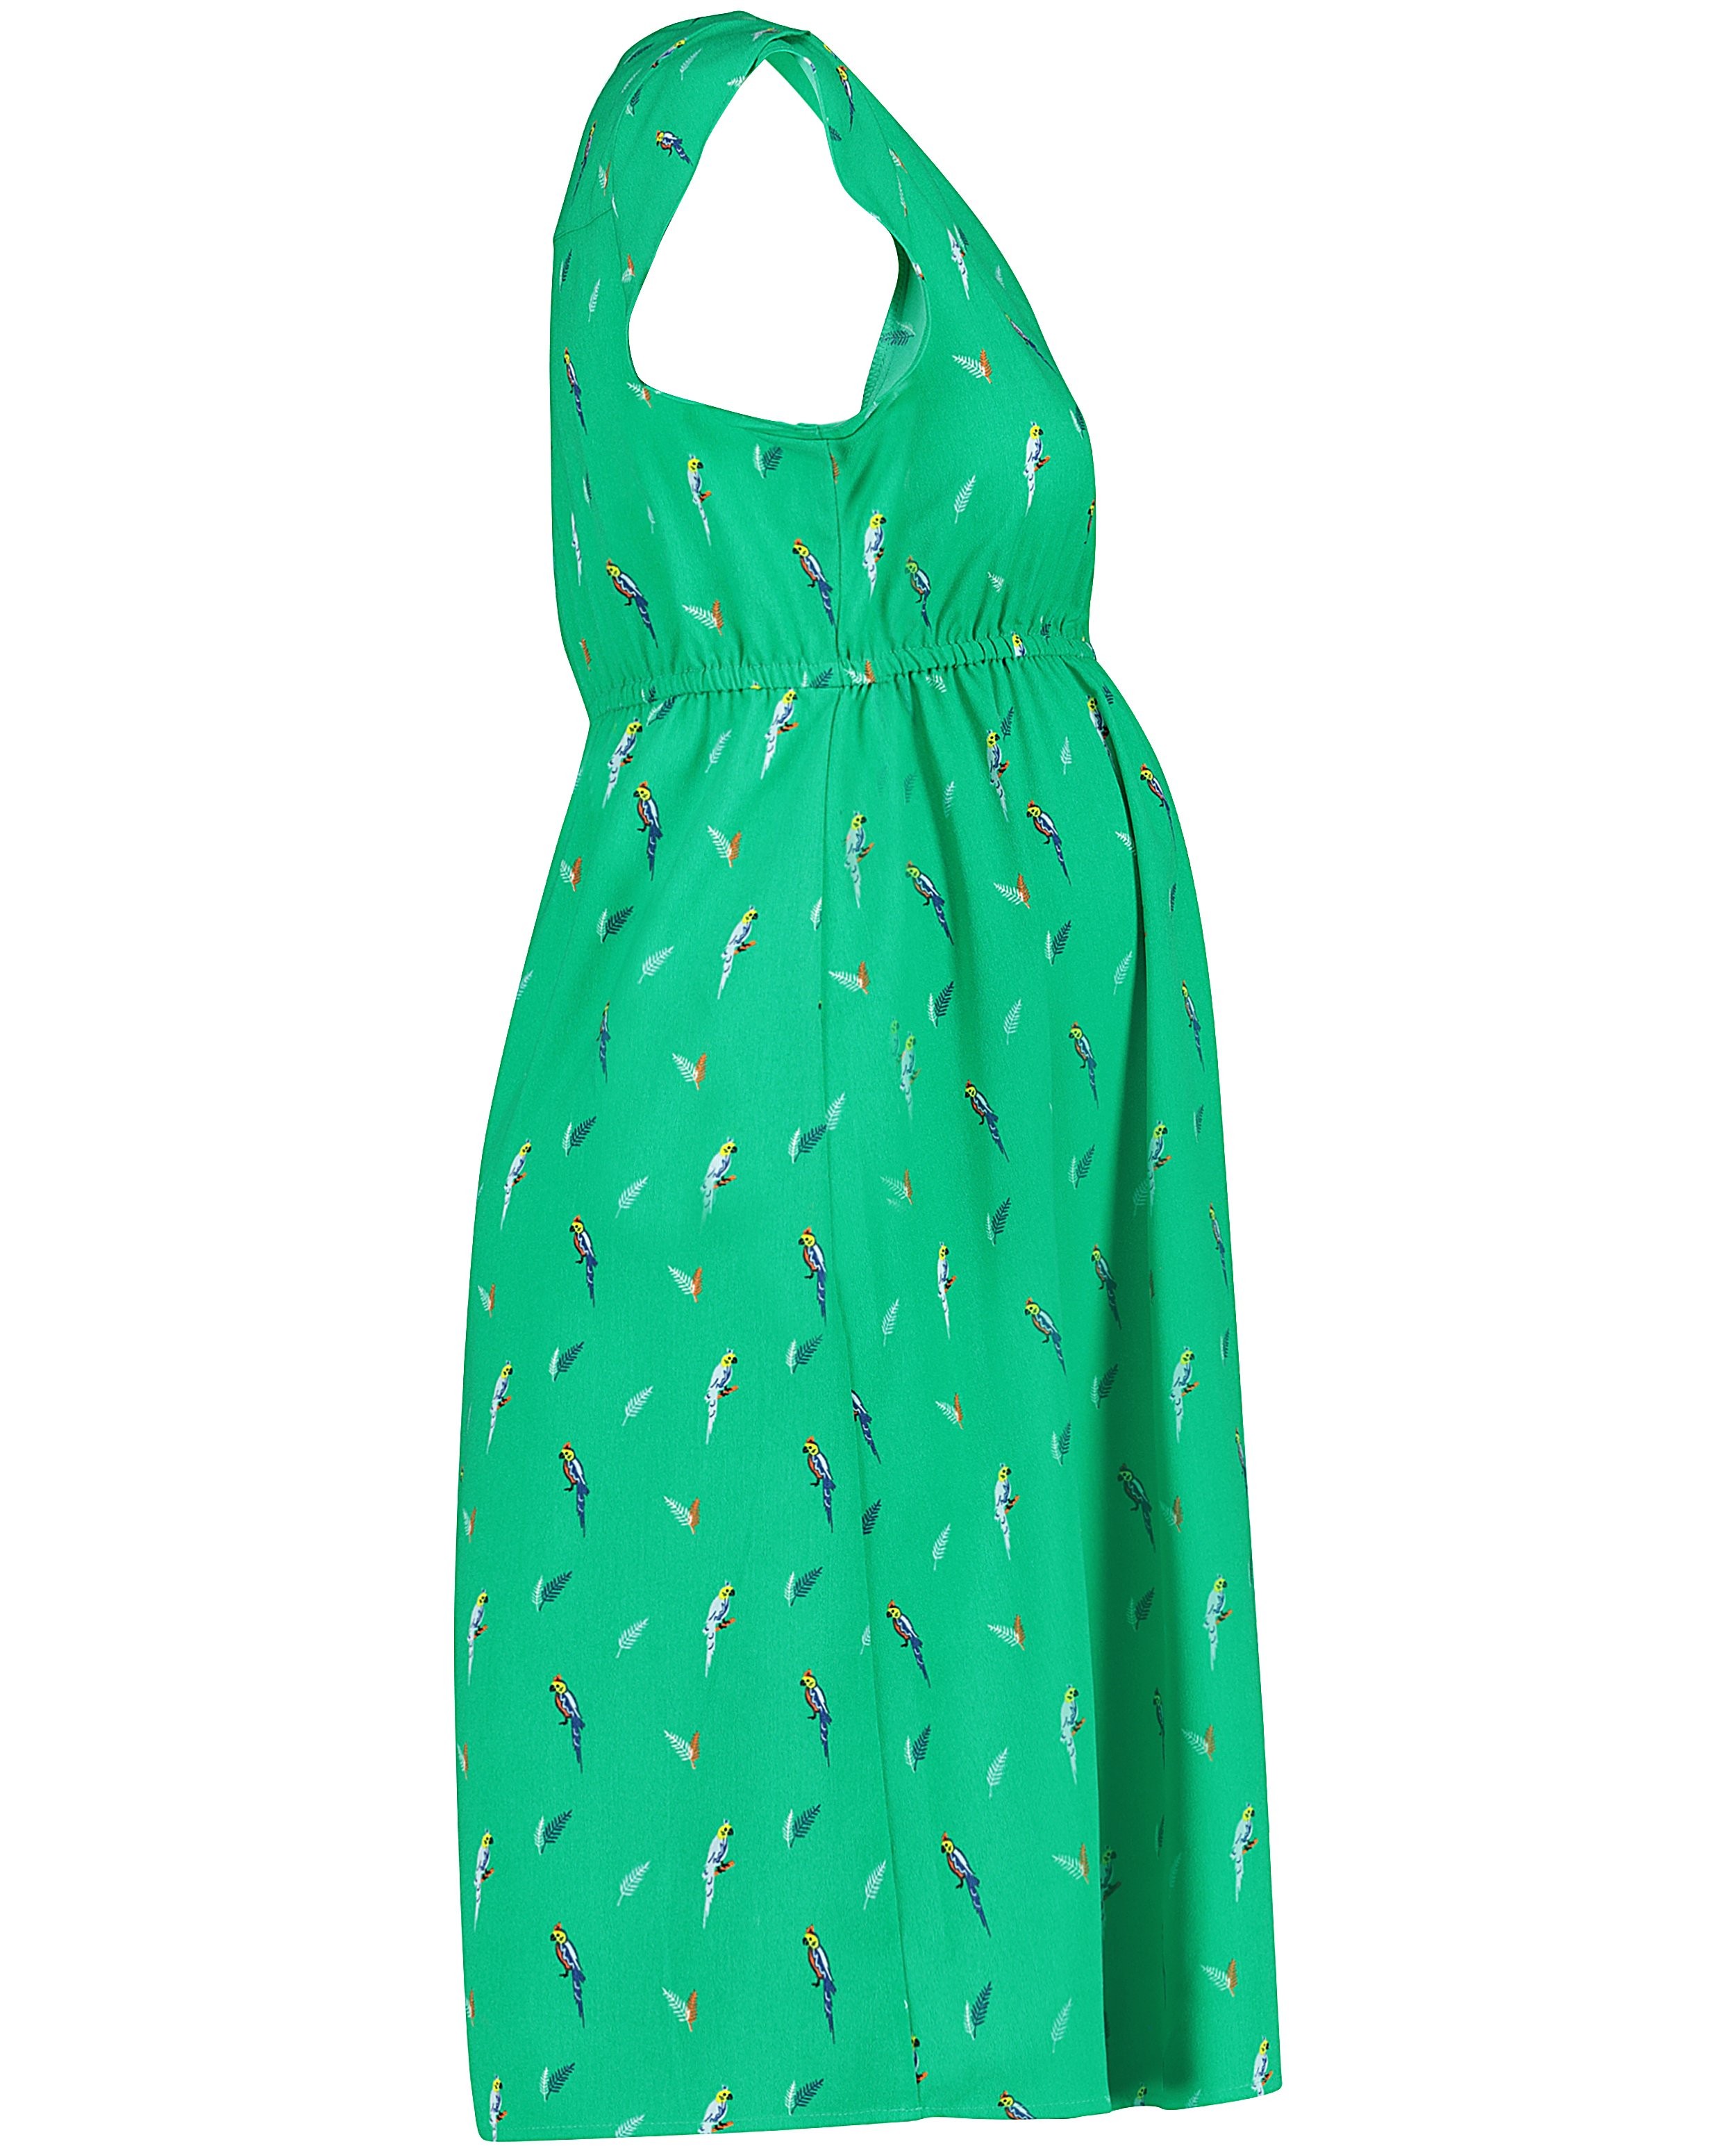 Kleedjes - Groene jurk met allover print JoliRonde